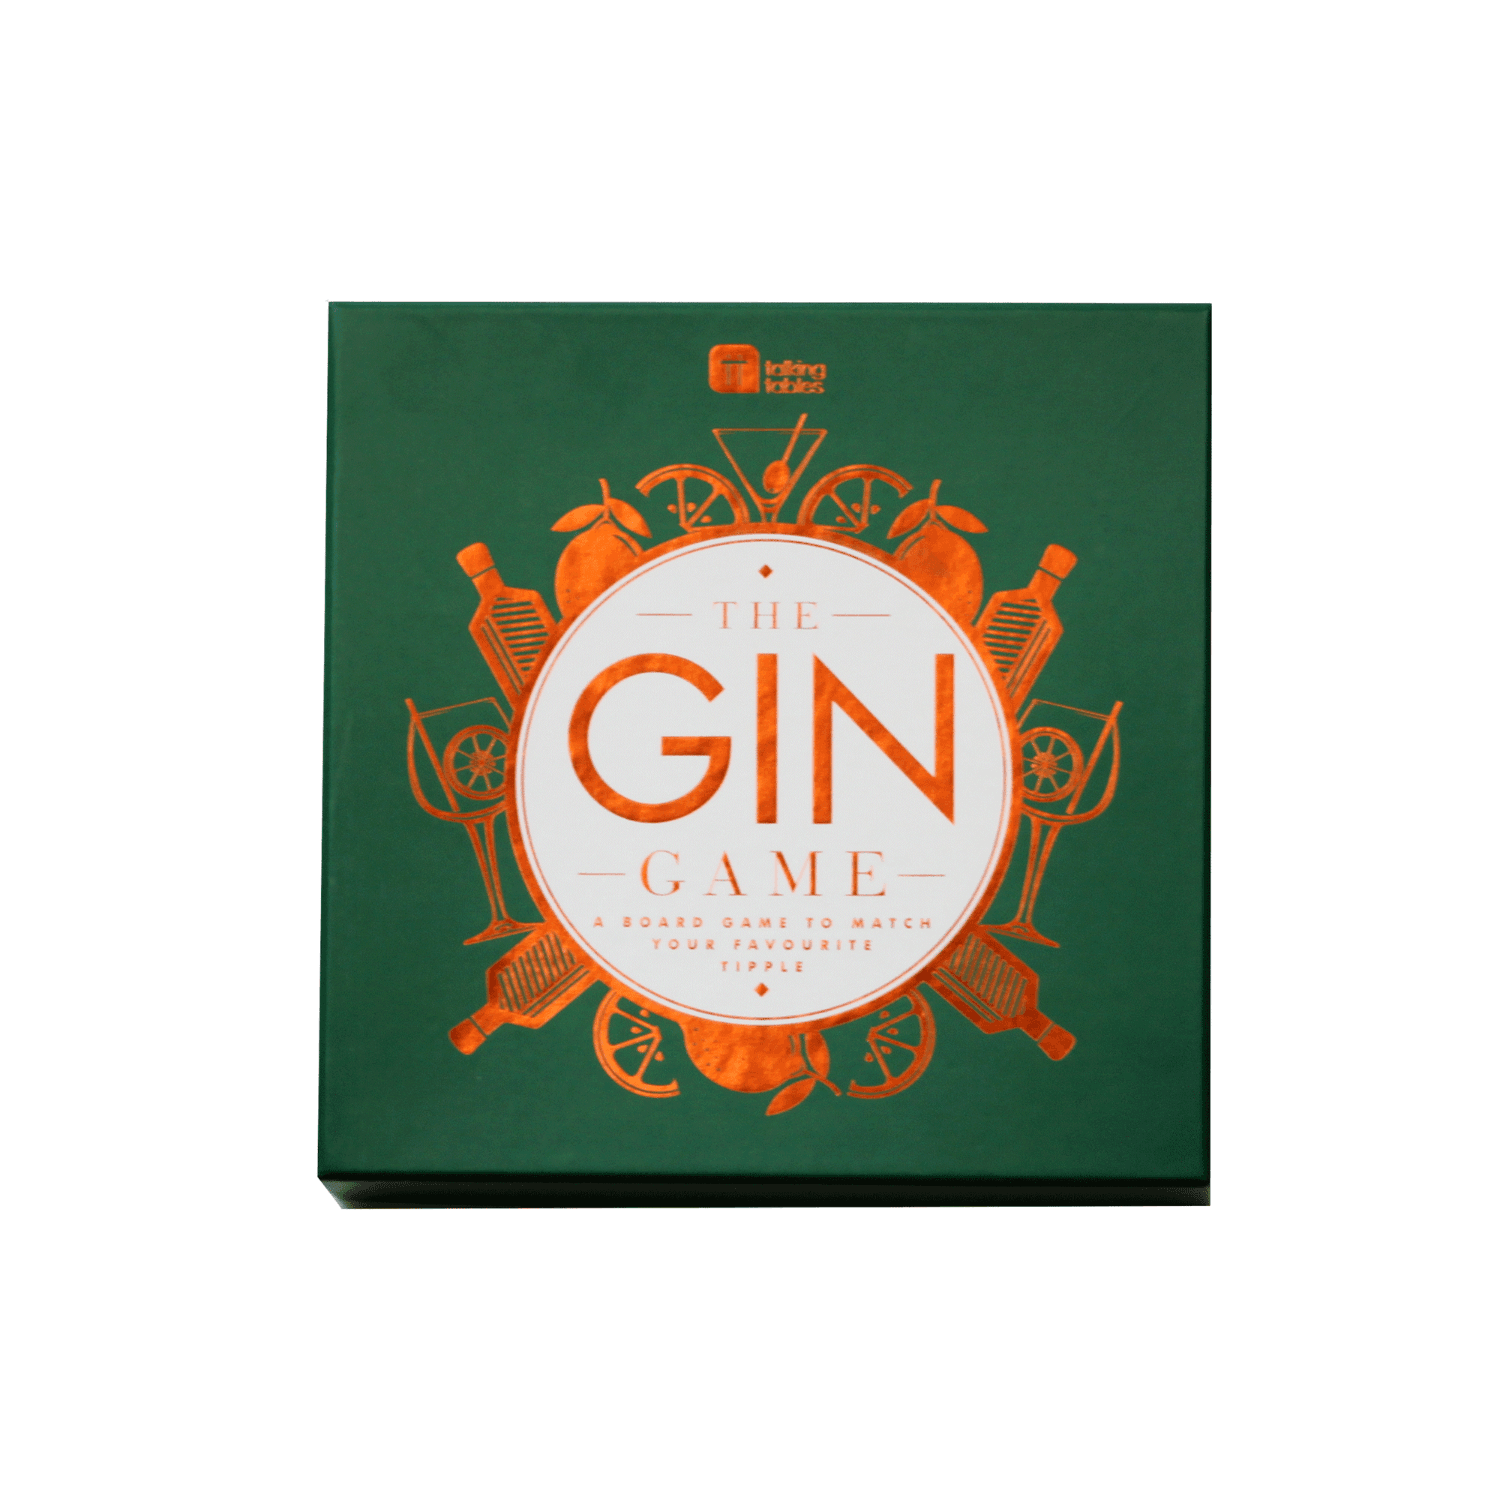 Green and Orange Game Logo - The Gin Game. Graham & Green